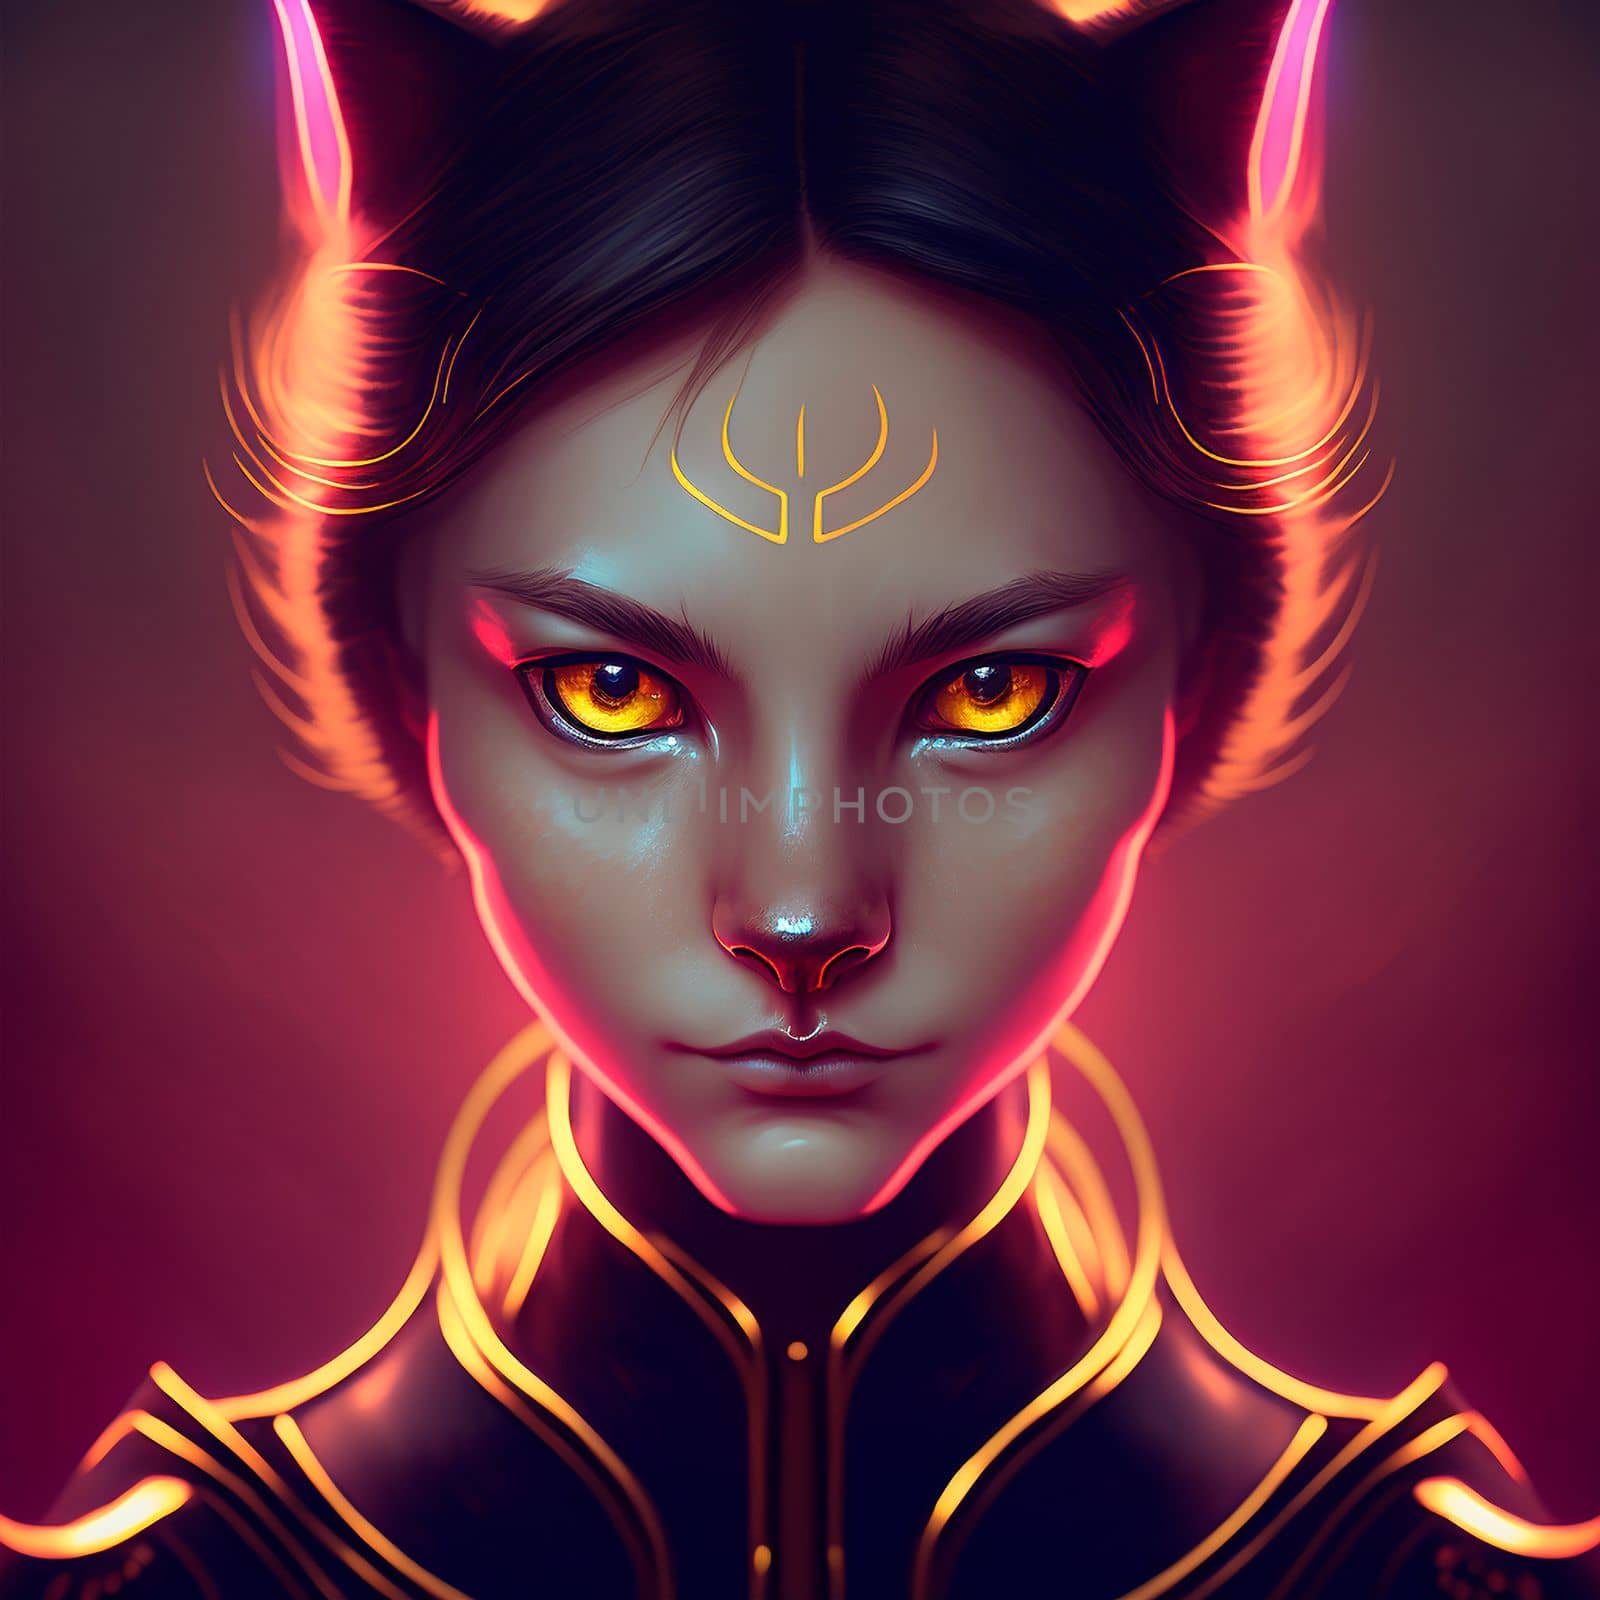 Cat girl in armor by NeuroSky